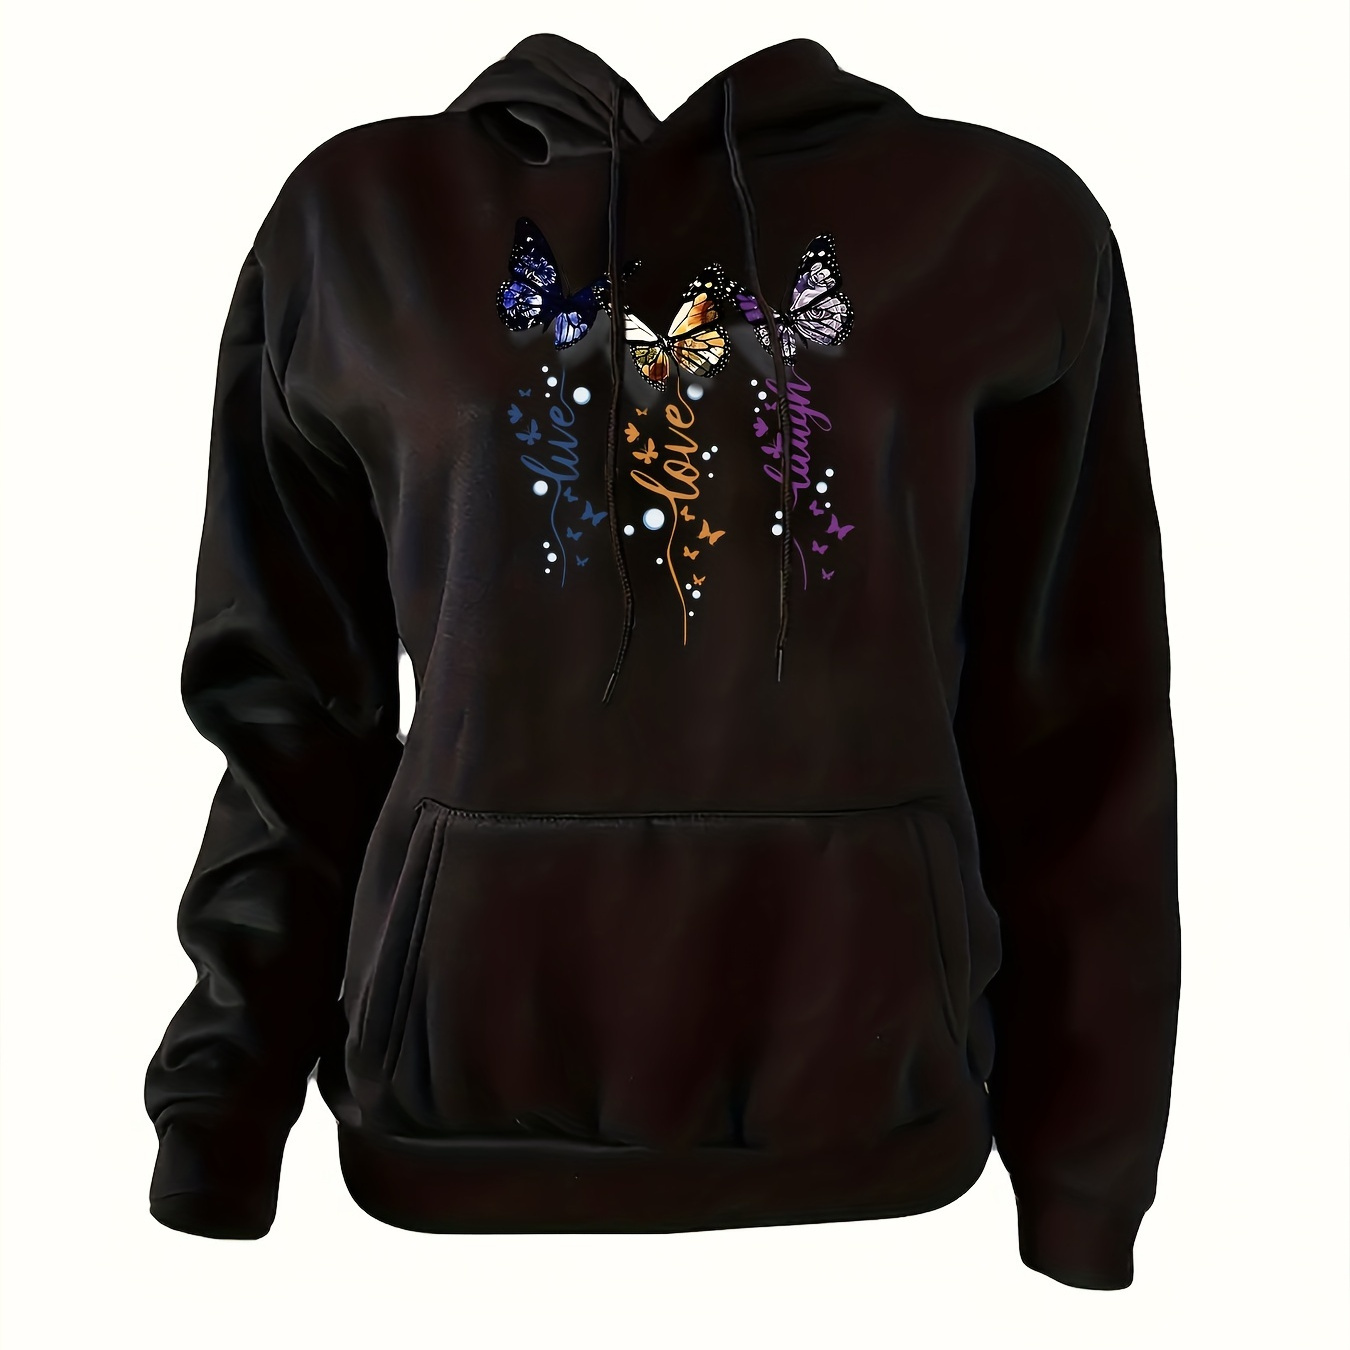 

Butterfly Print Hoodie, Casual Long Sleeve Kangaroo Pocket Drawstring Hooded Sweatshirt, Women's Clothing